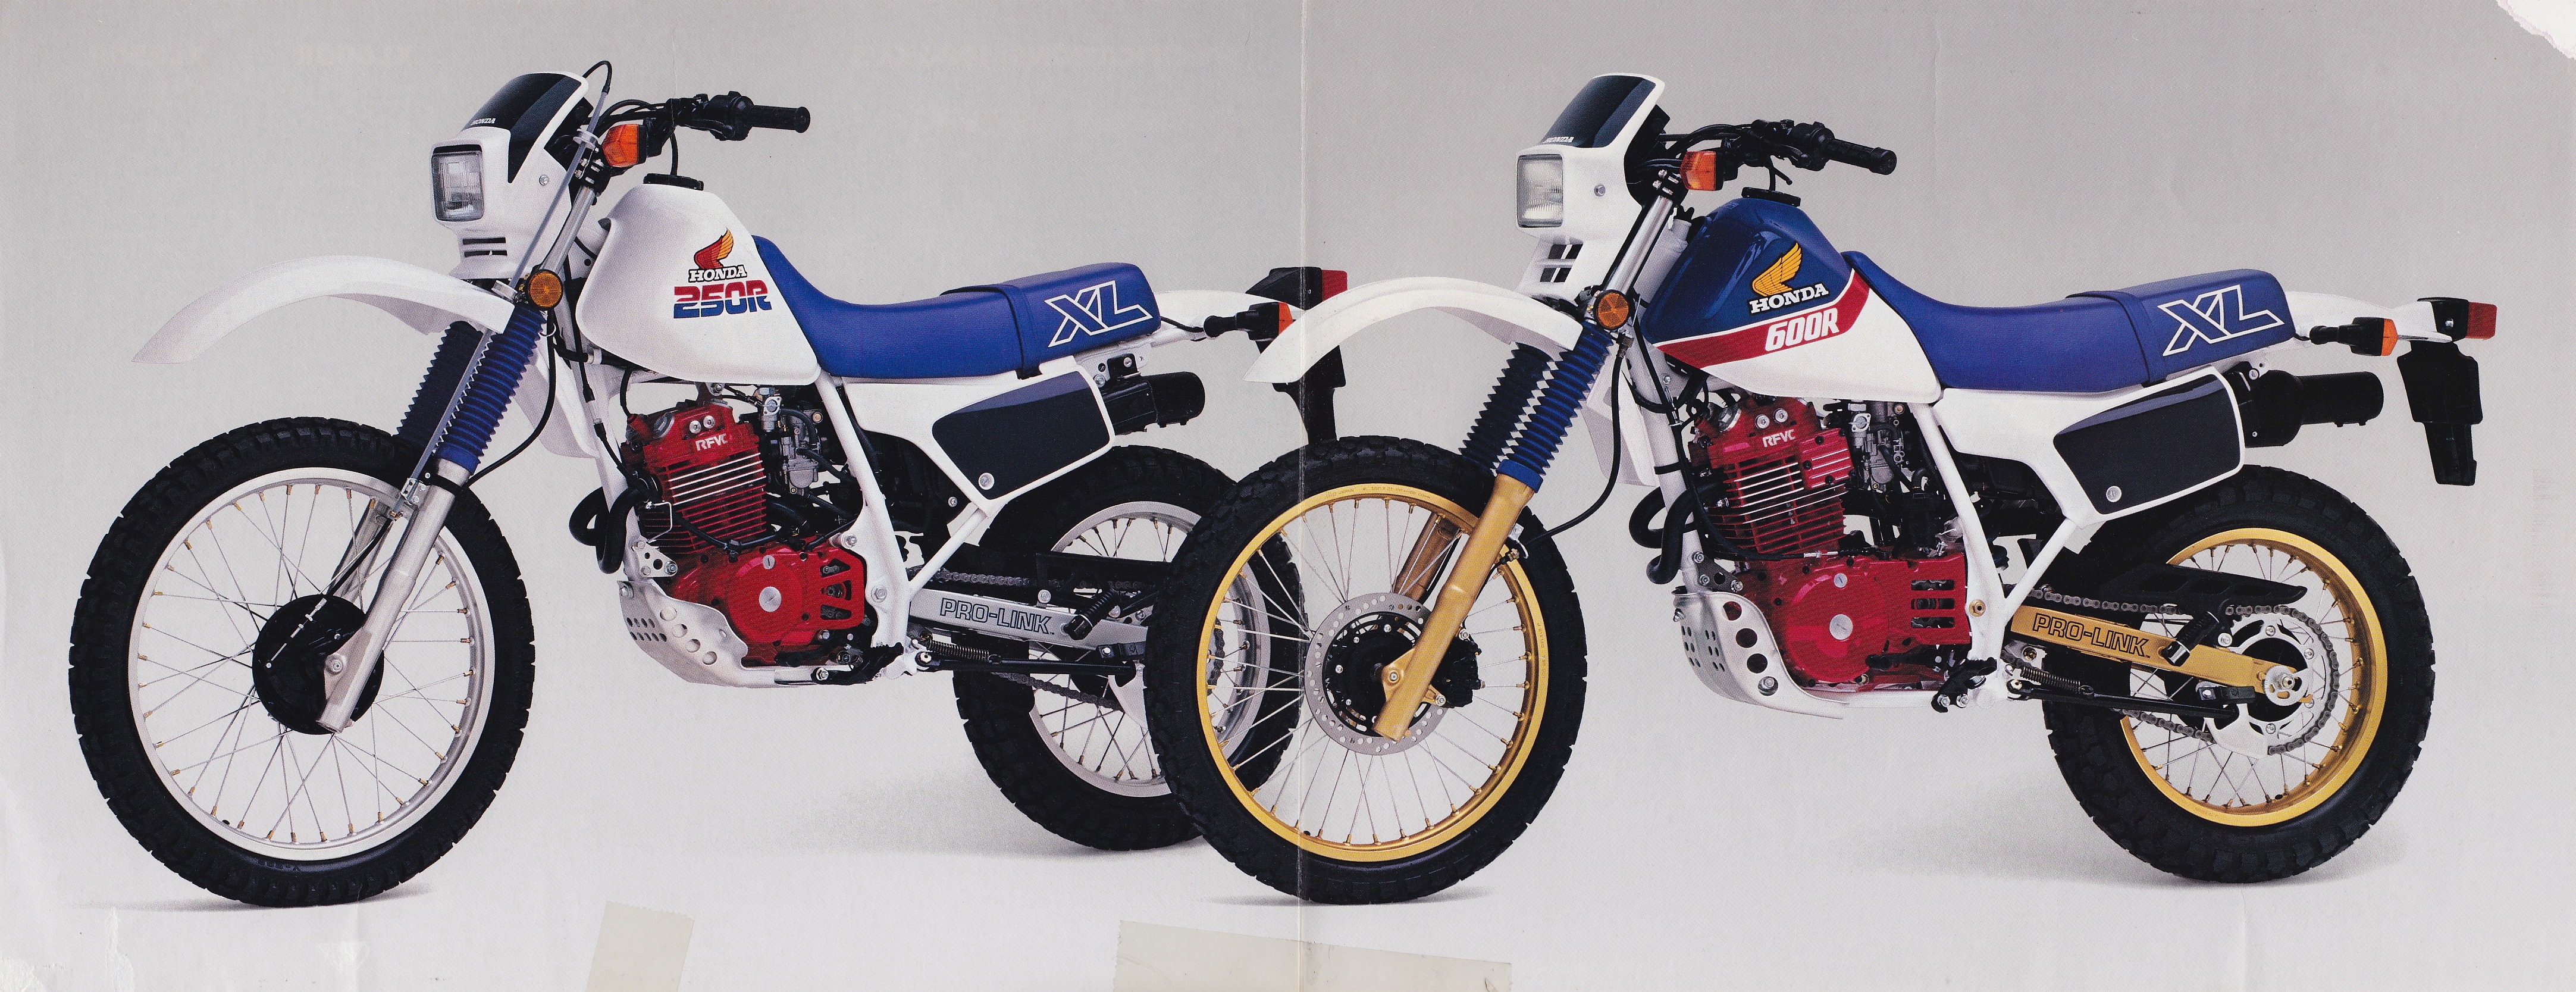 1986 Honda Xl250r Image 6